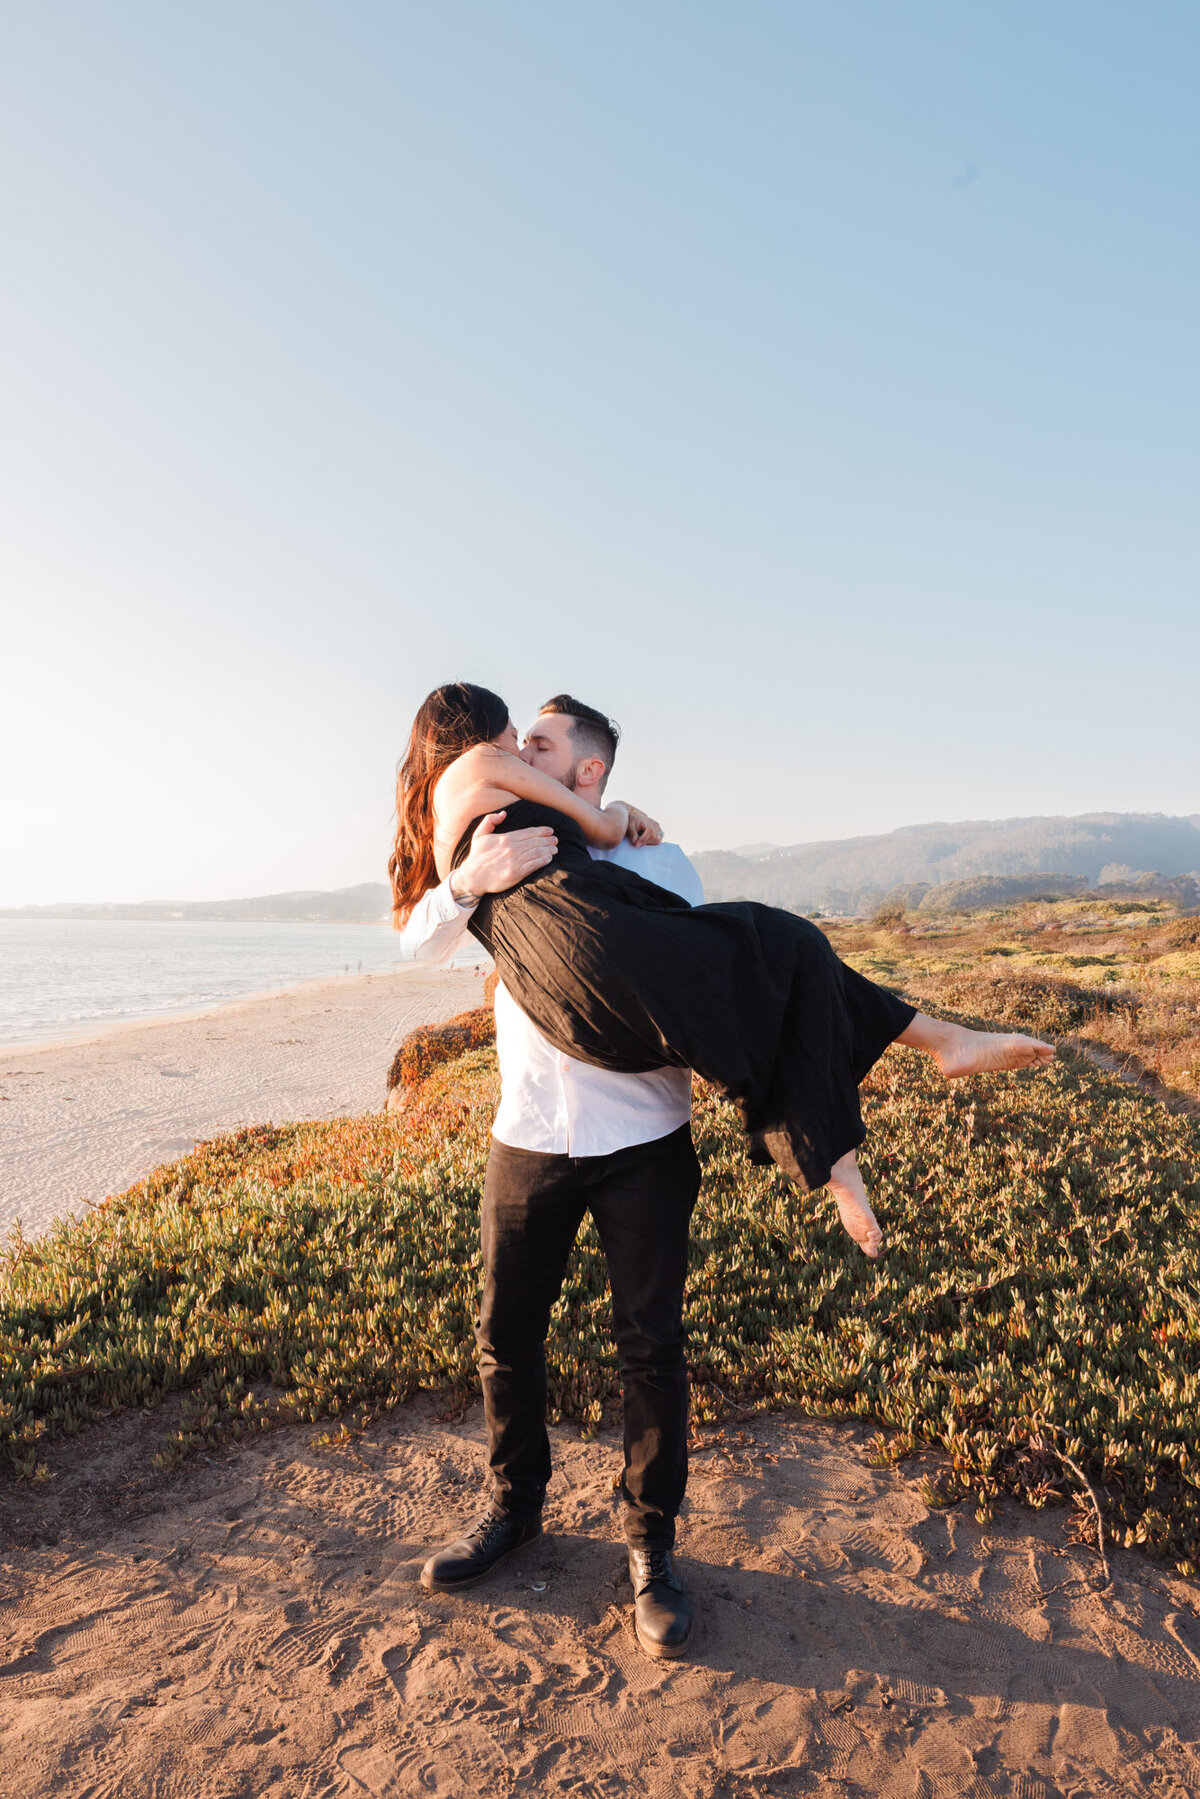 Kyle Woolum + Stephanie-Proposal Engagement-Half Moon Bay-Dunes Beach-San Francisco Wedding Photographer-San Francisco Photographer-Half Moon Bay Photographer-Emily Pillon Photography-S-092323-45